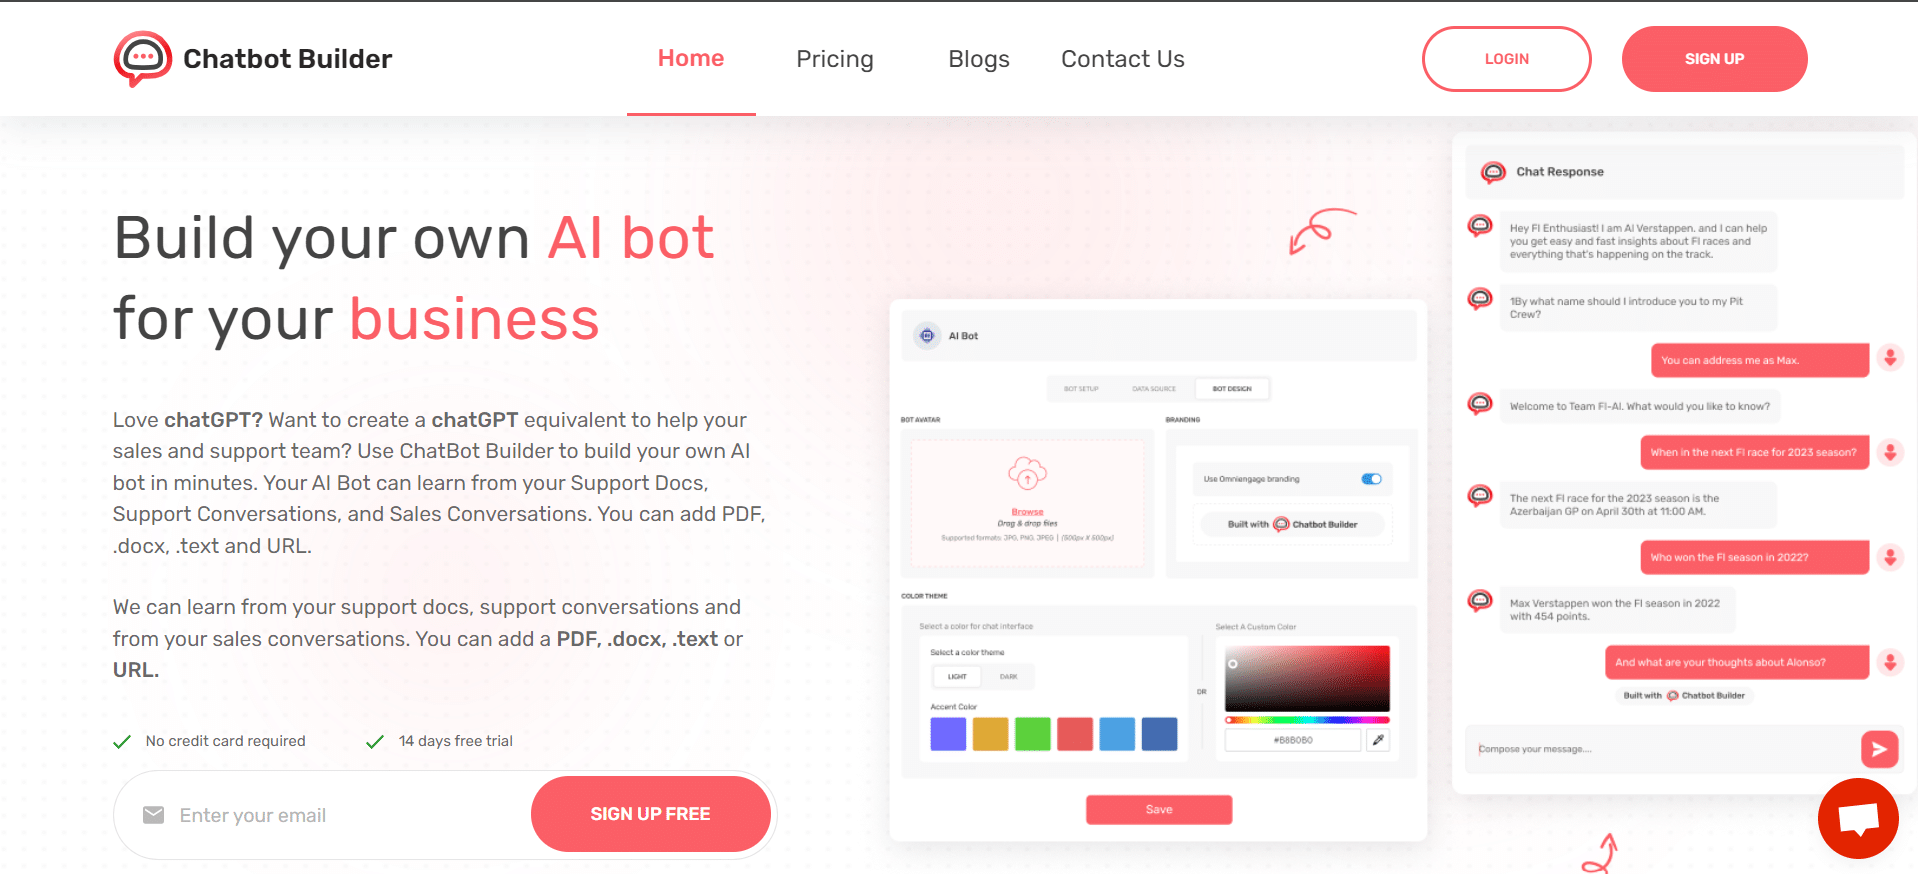 Chatbot builder homepage